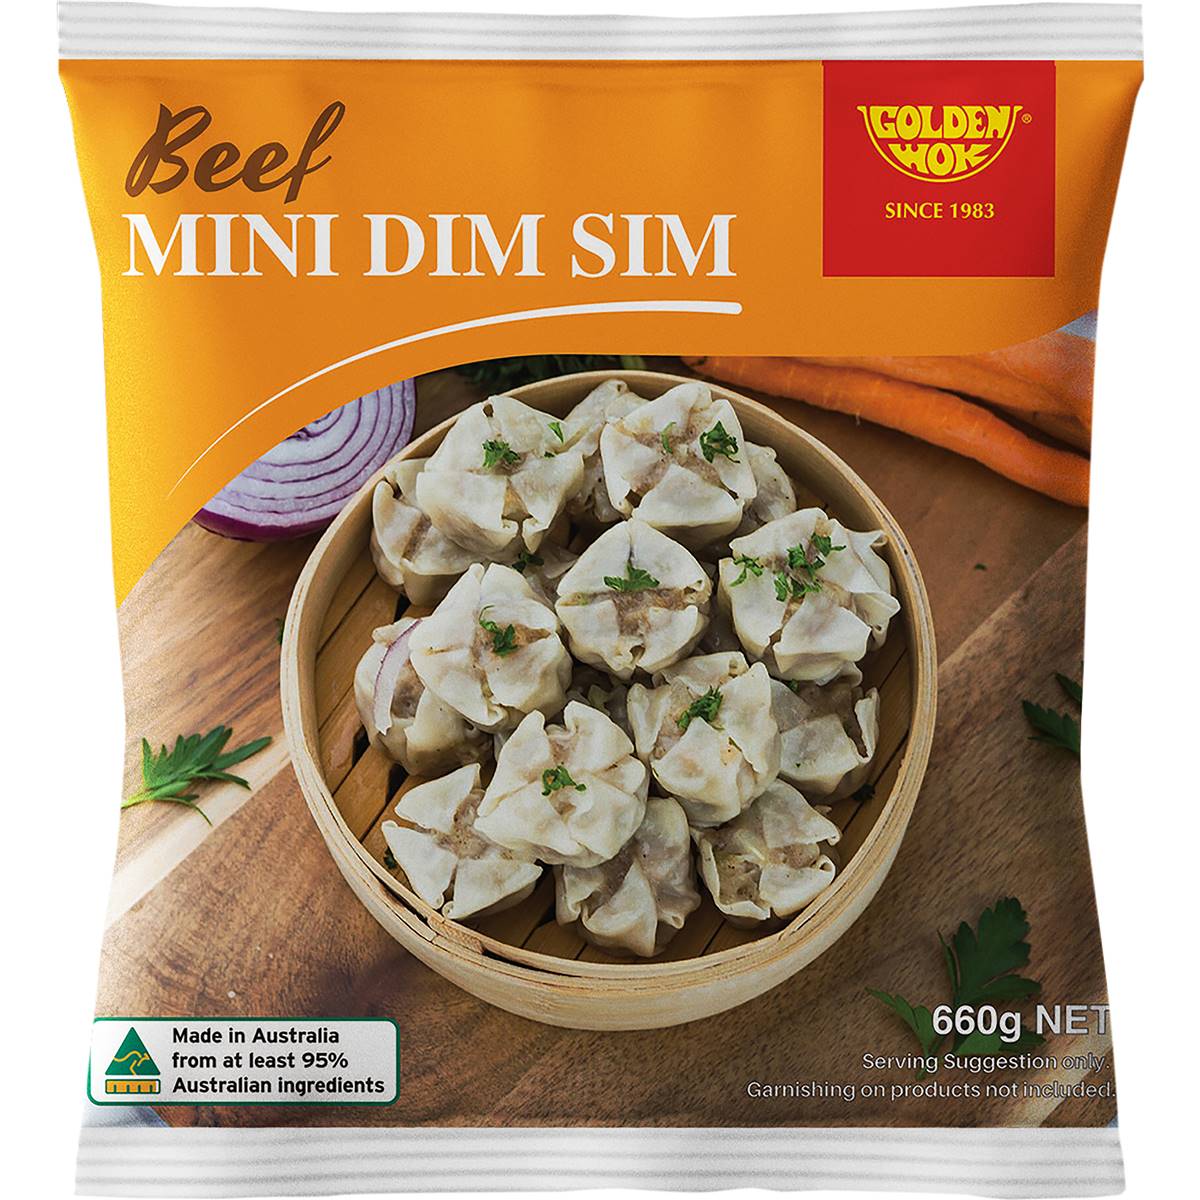 Golden Wok Mini Dim Sims Beef 660g